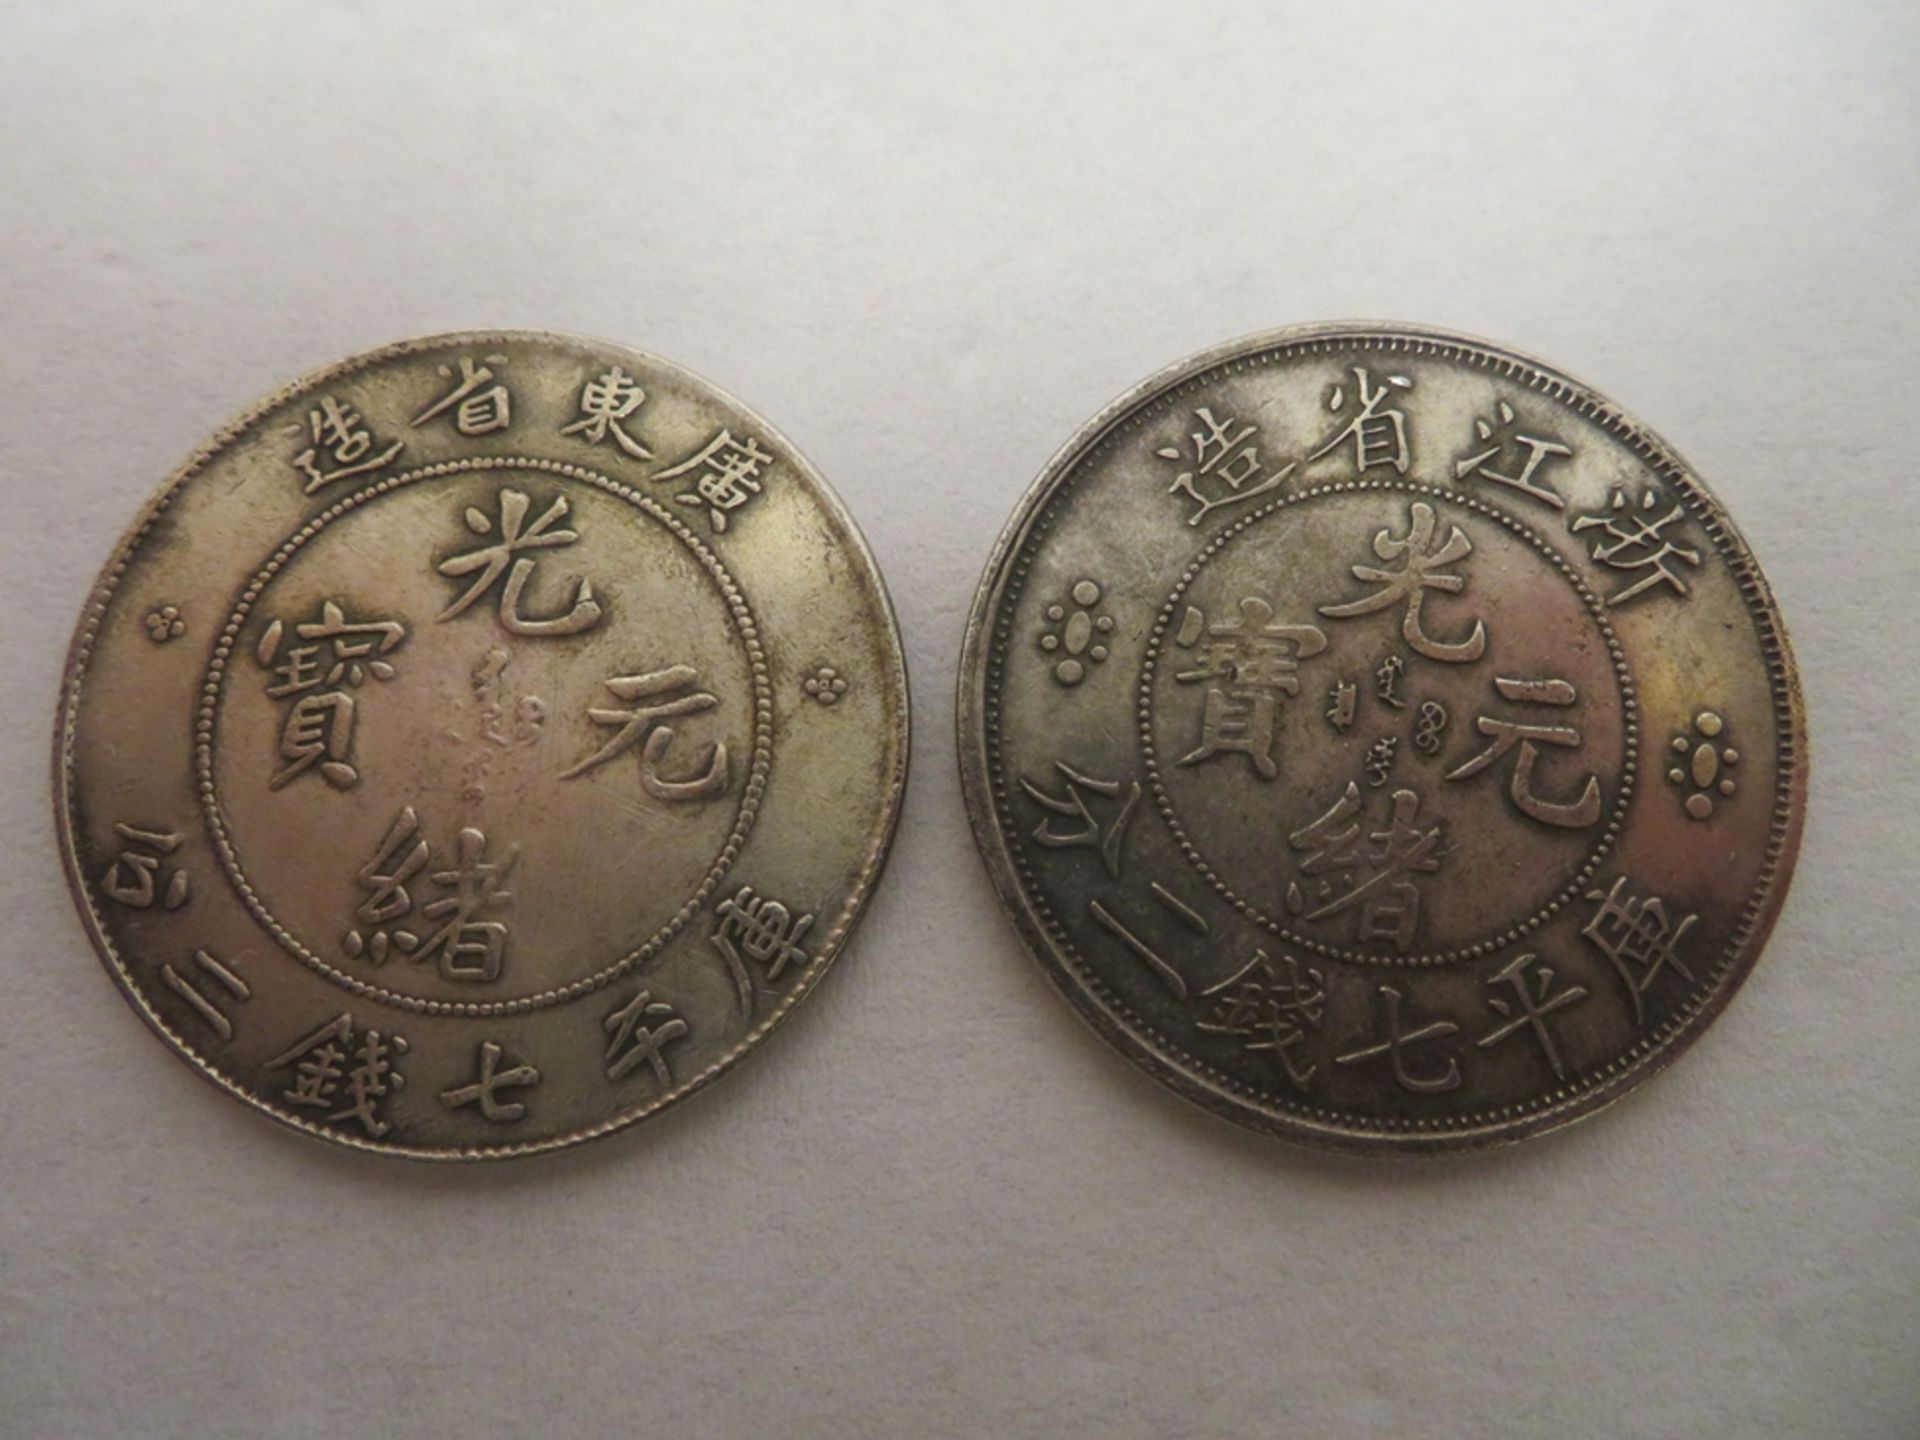 2 Münzen, China, Kwang Tung & Cheh Kiang Province, Kupfer versilbert, d 3,8 cm.